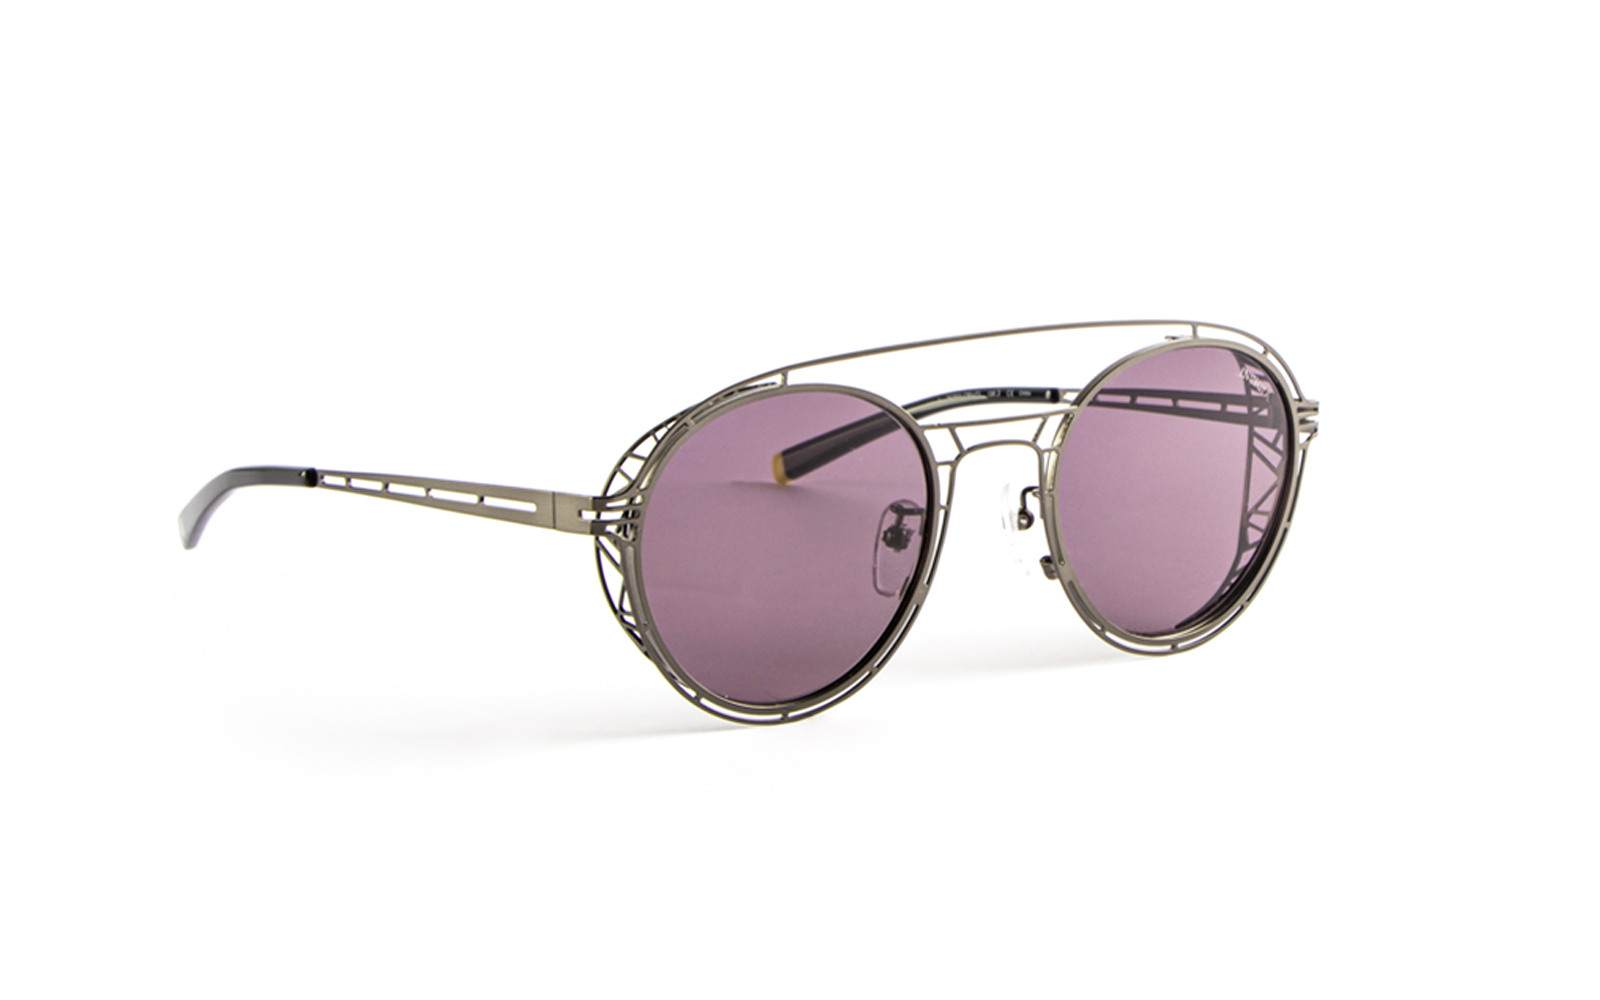 Invicta Women's Objet D Art Round Sunglasses, Pink (26355-OBJ-01)